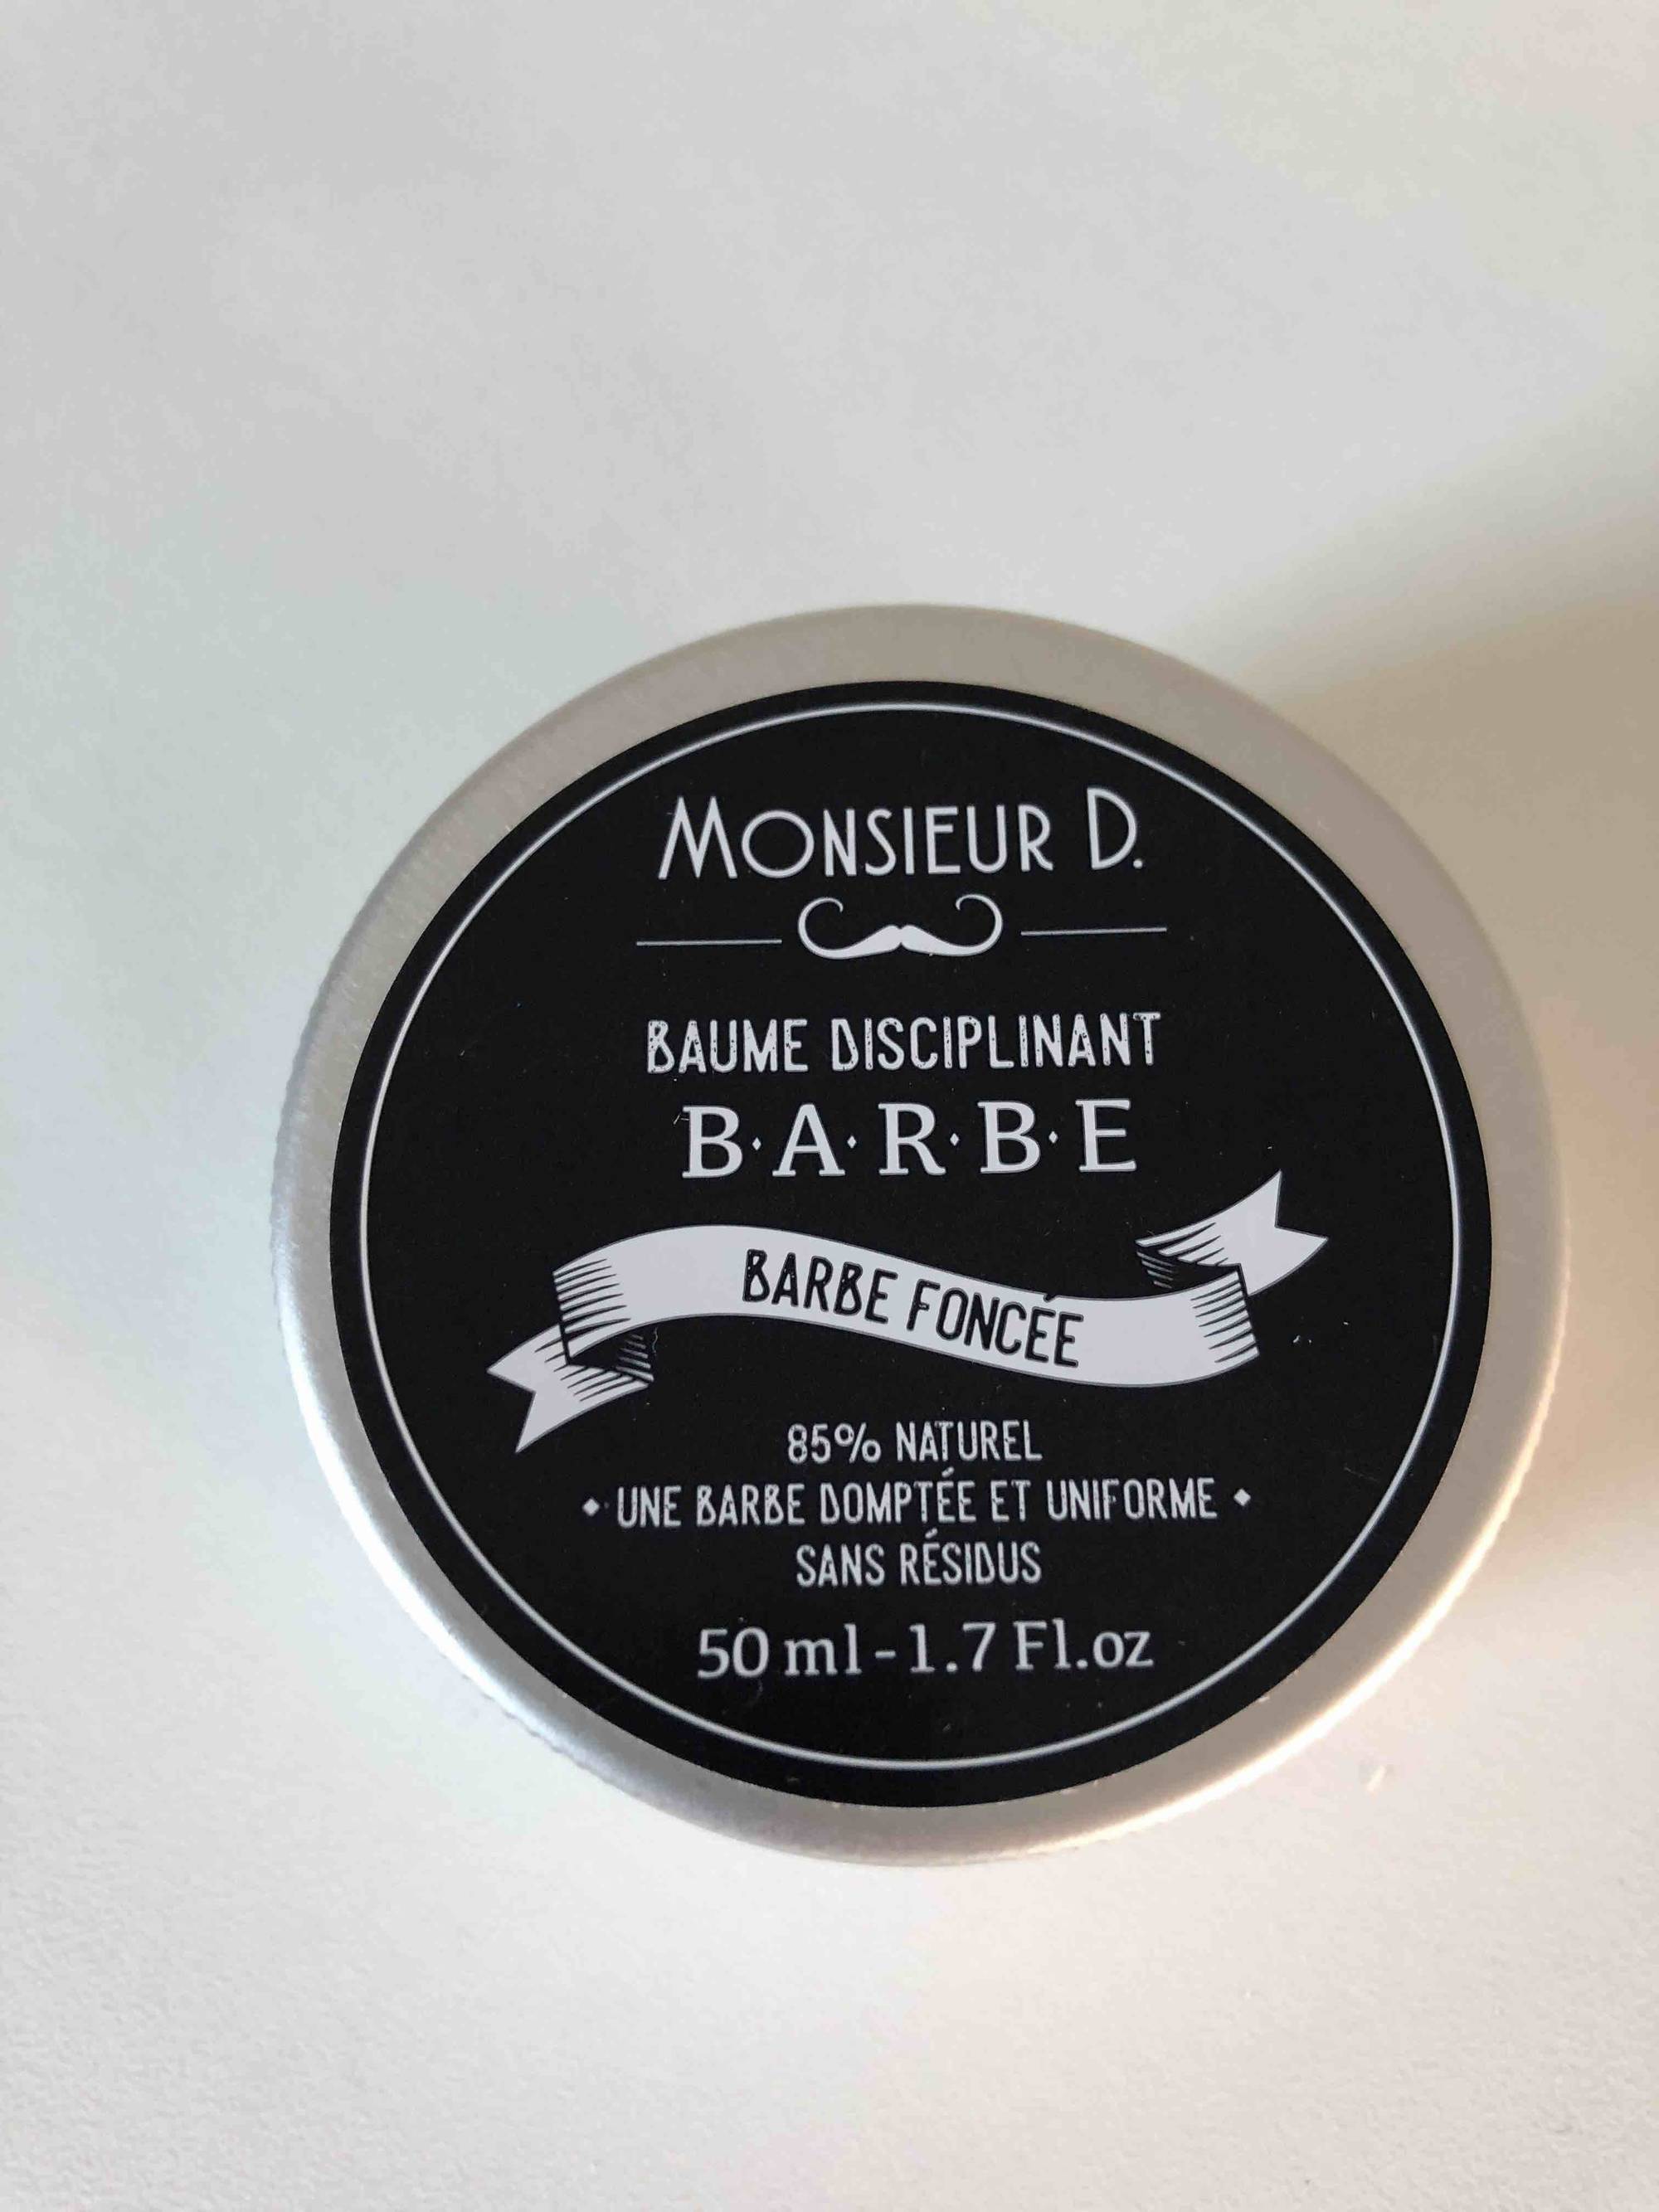 MONSIEUR D. - Baume disciplinant barbe foncée